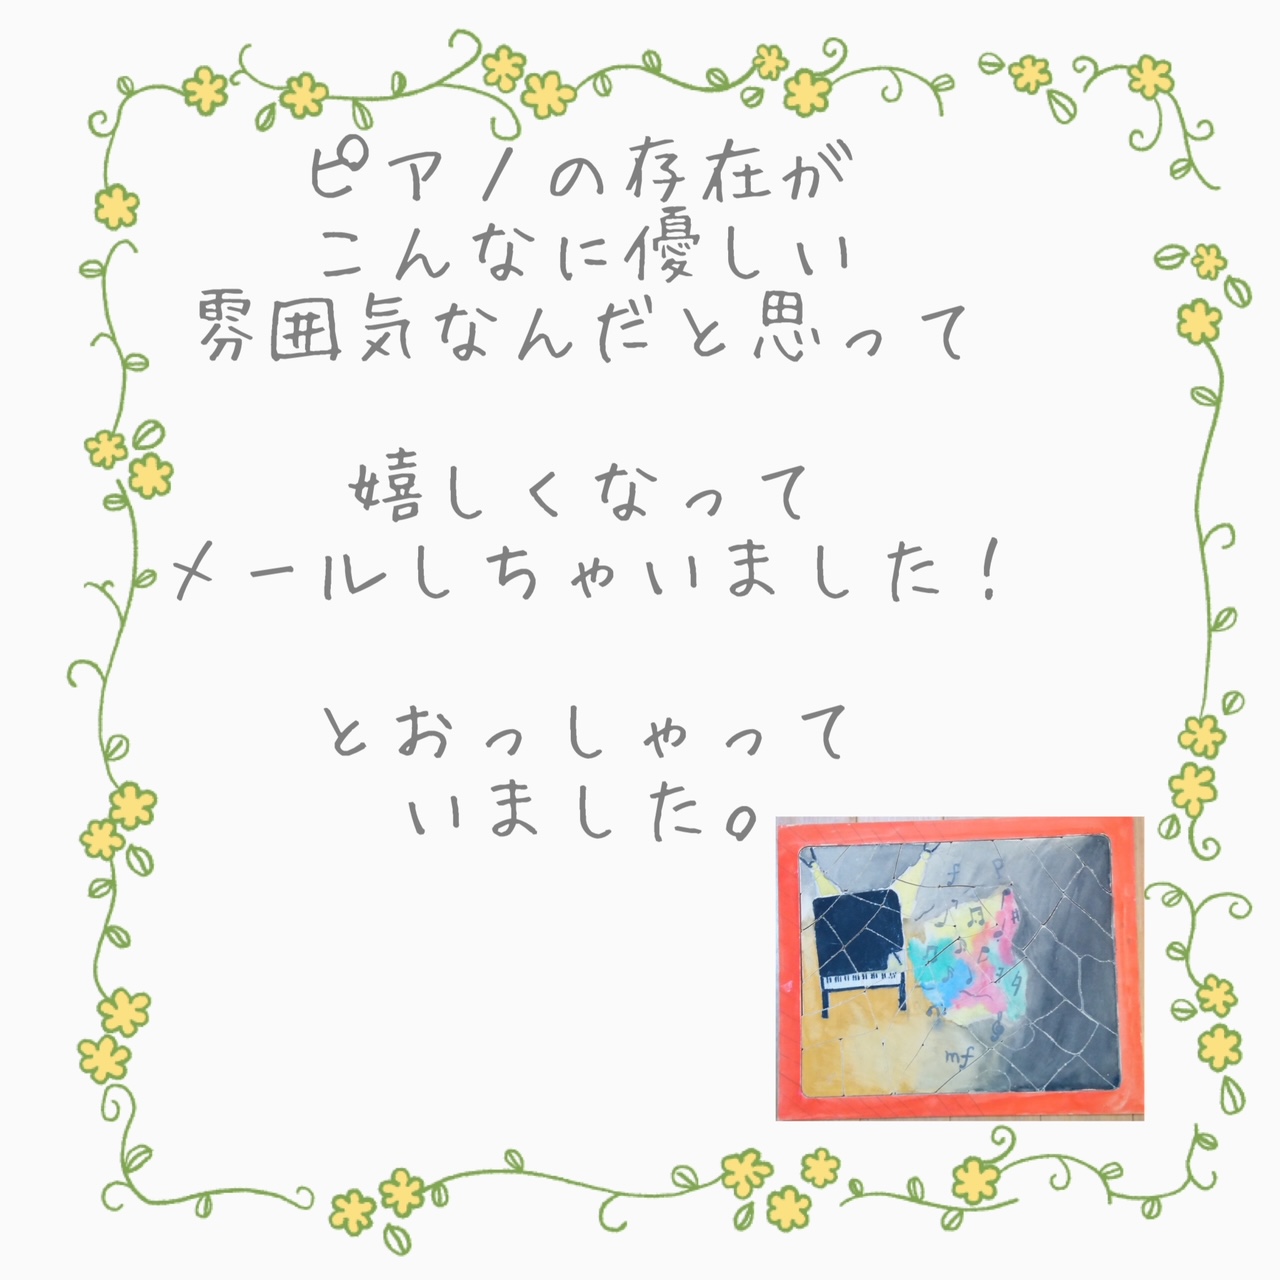 image112.jpeg alt="Misuzu Music Houseにお通いの男の子の作品です"